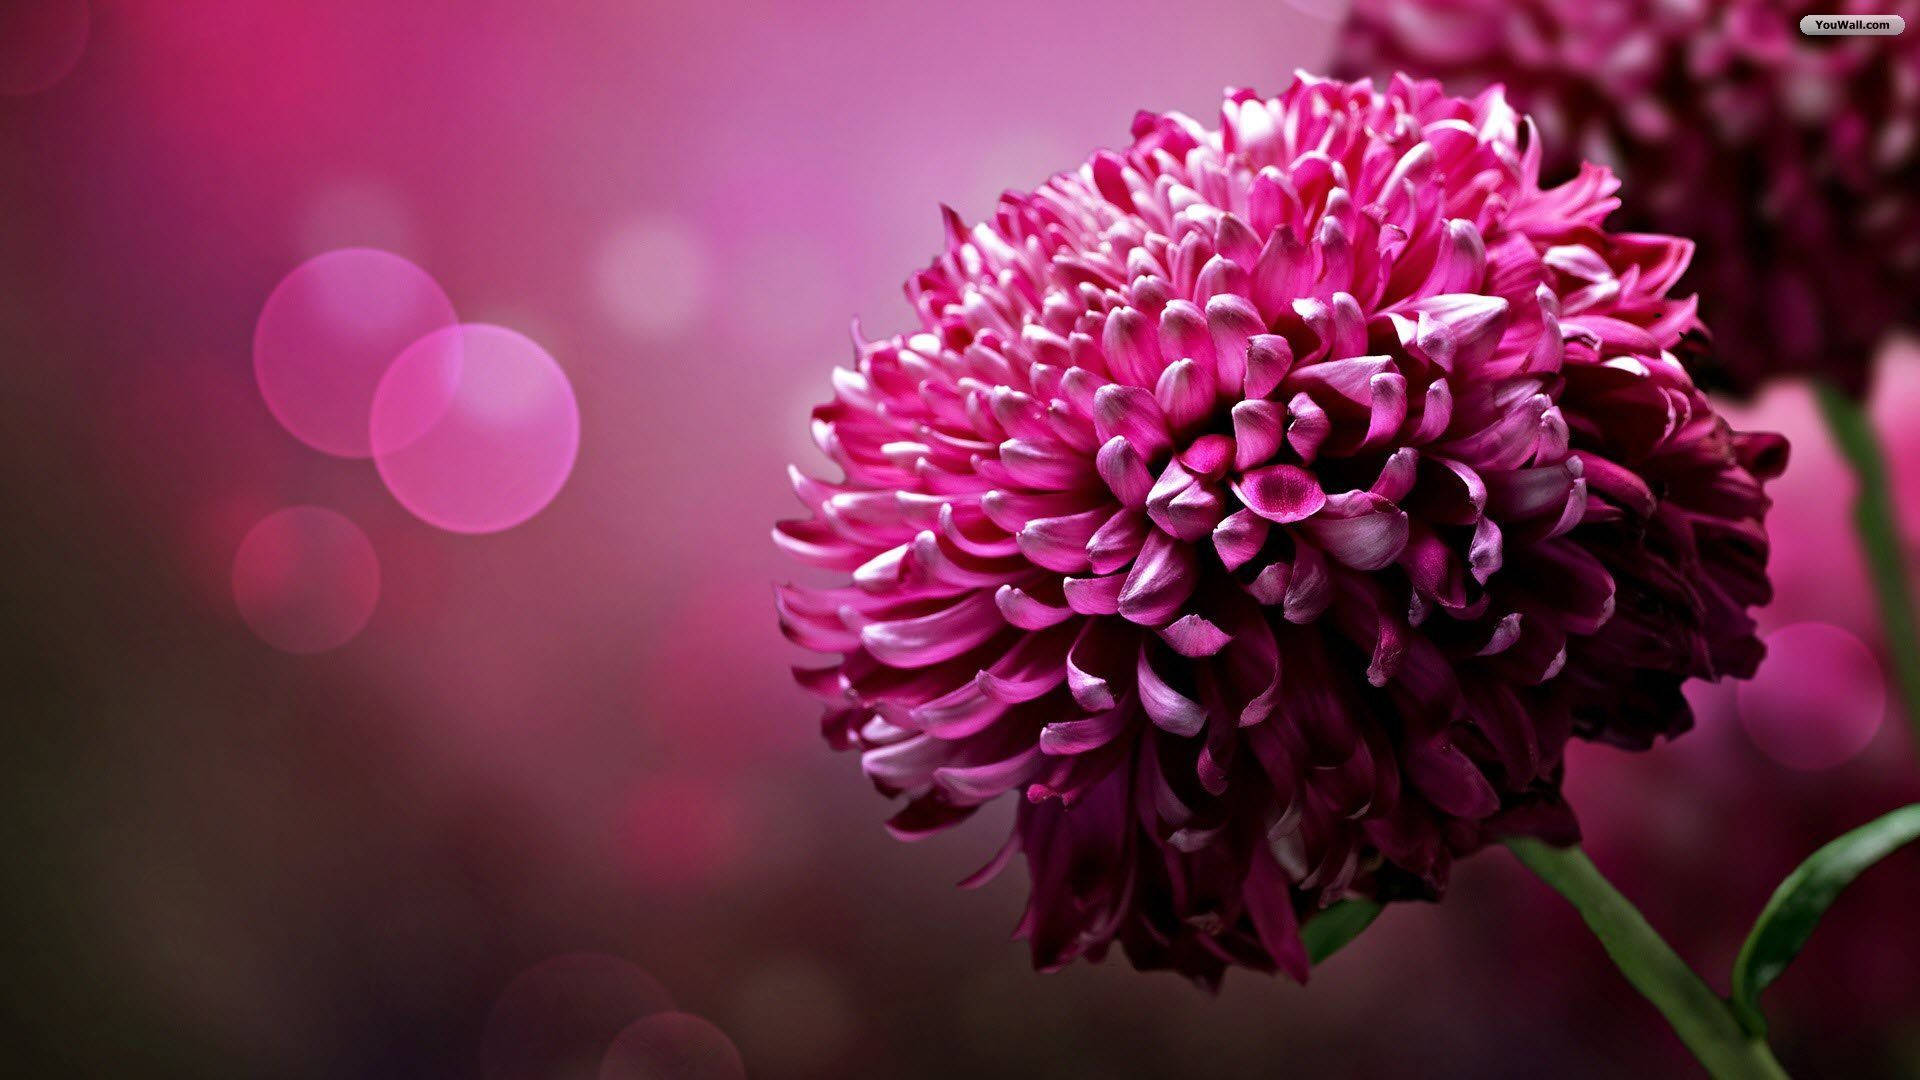 Chrysanthemum Purple Flowers Digital Art Wallpaper